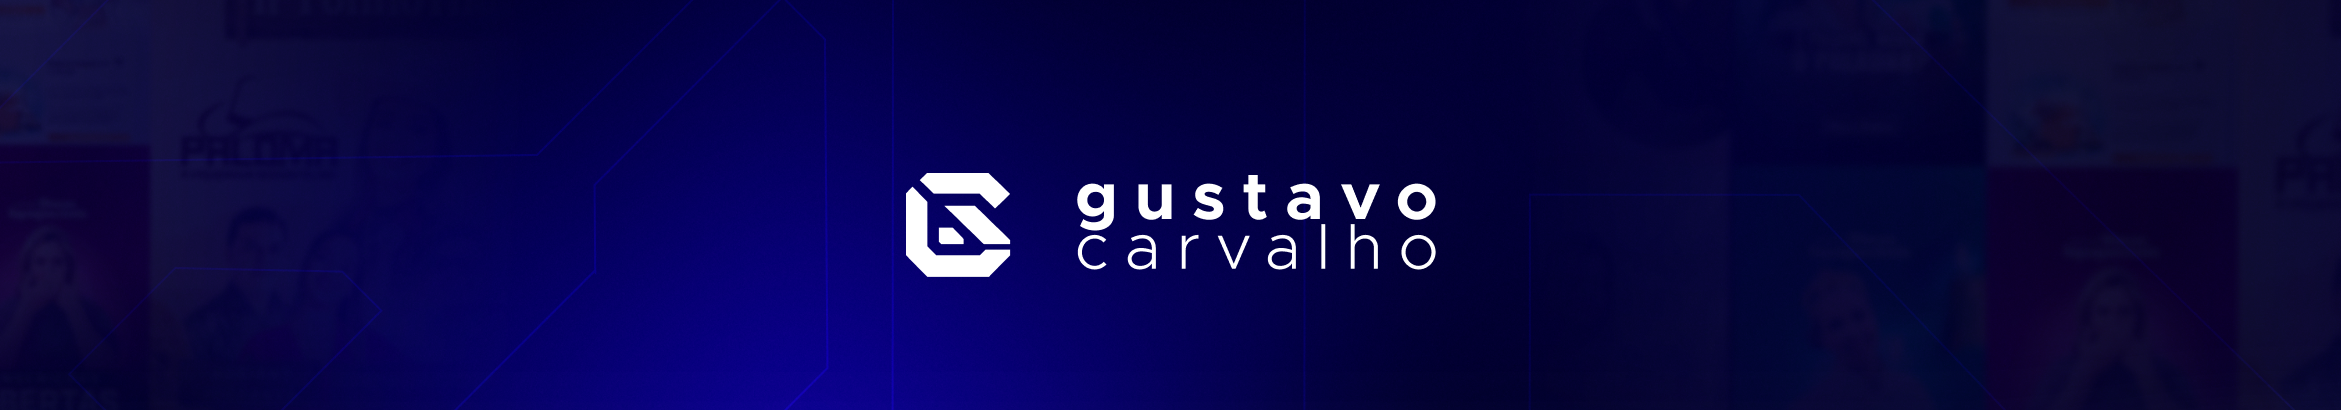 Gustavo de Carvalho's profile banner